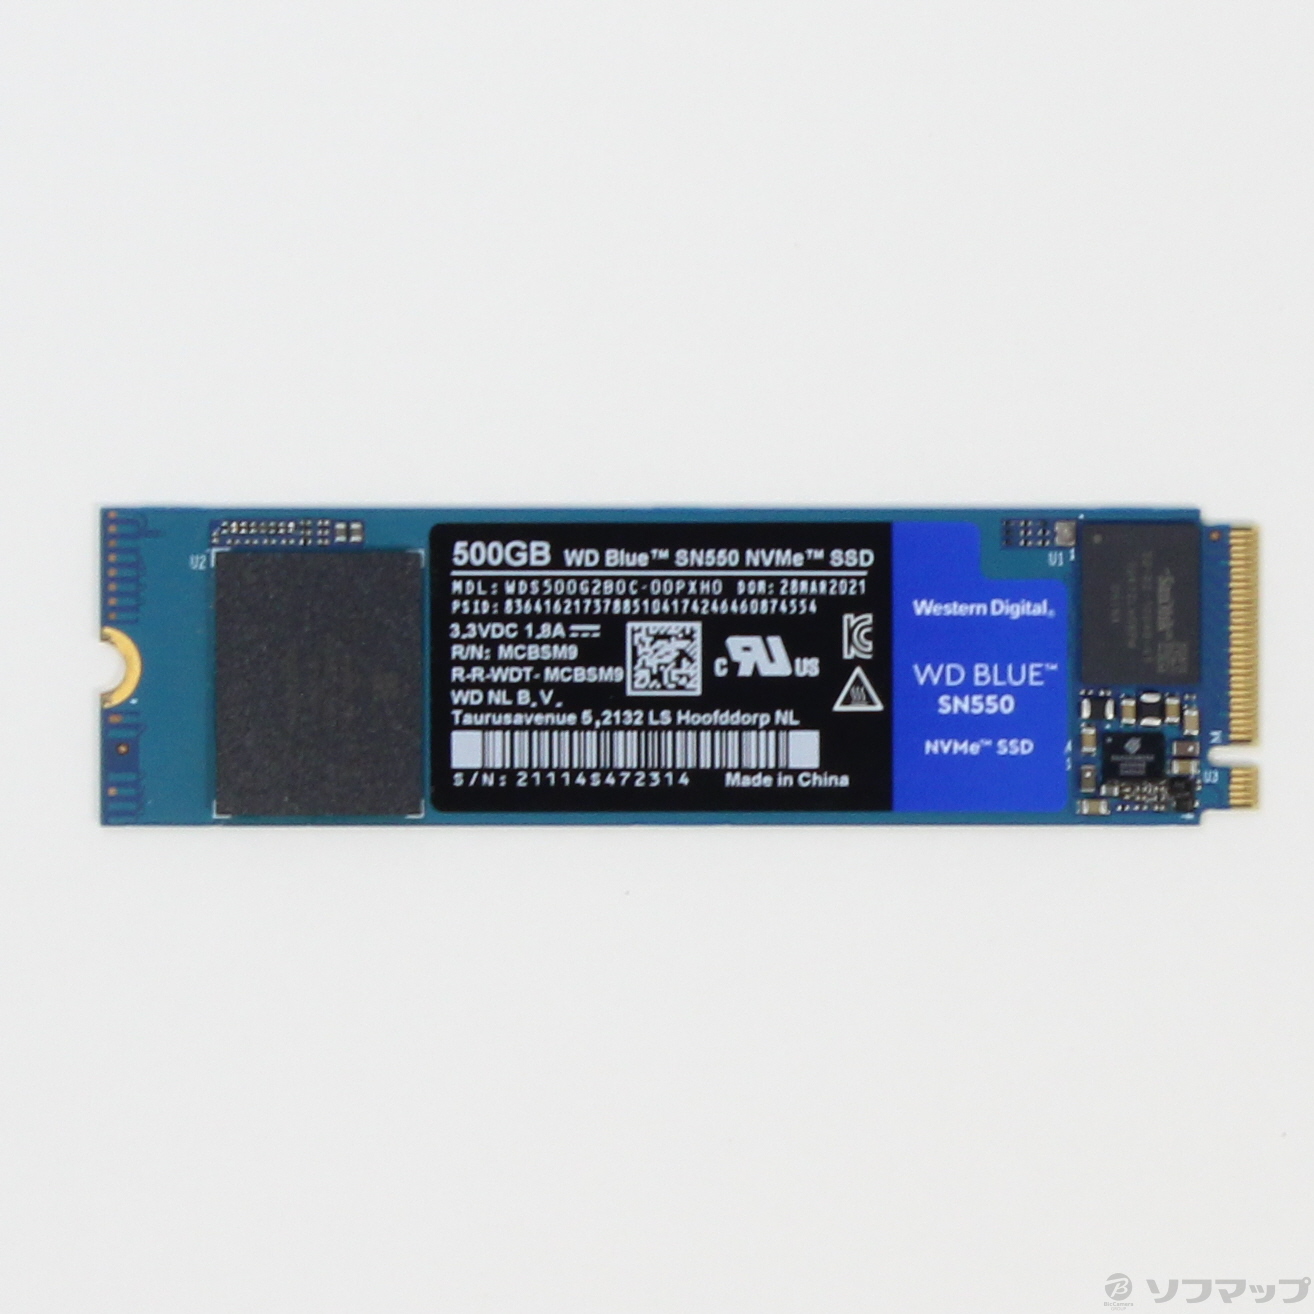 WD BLUE SN550 NVMe SSD 500GB